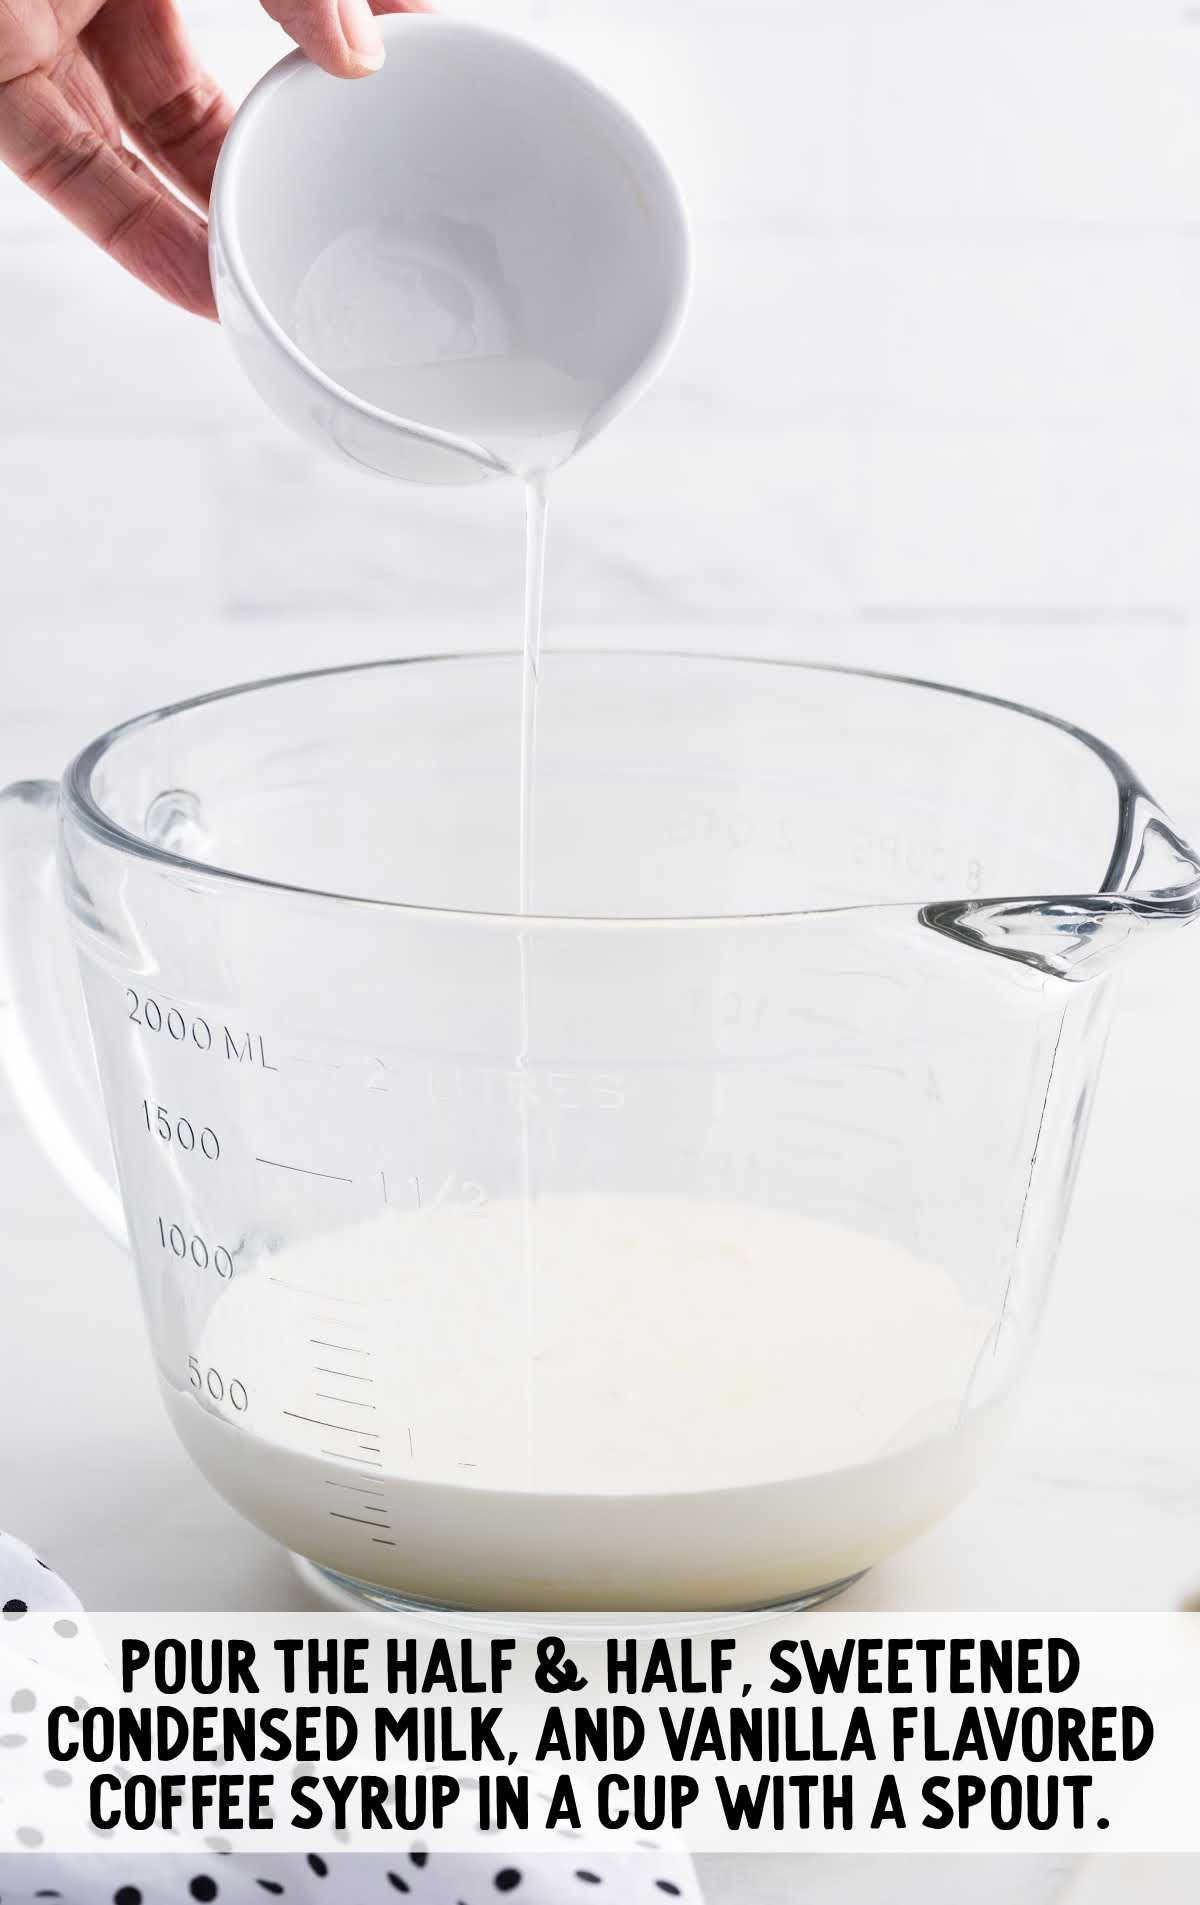 half & half, sweetened condense milk, and vanilla coffee syrup in a measuring cup